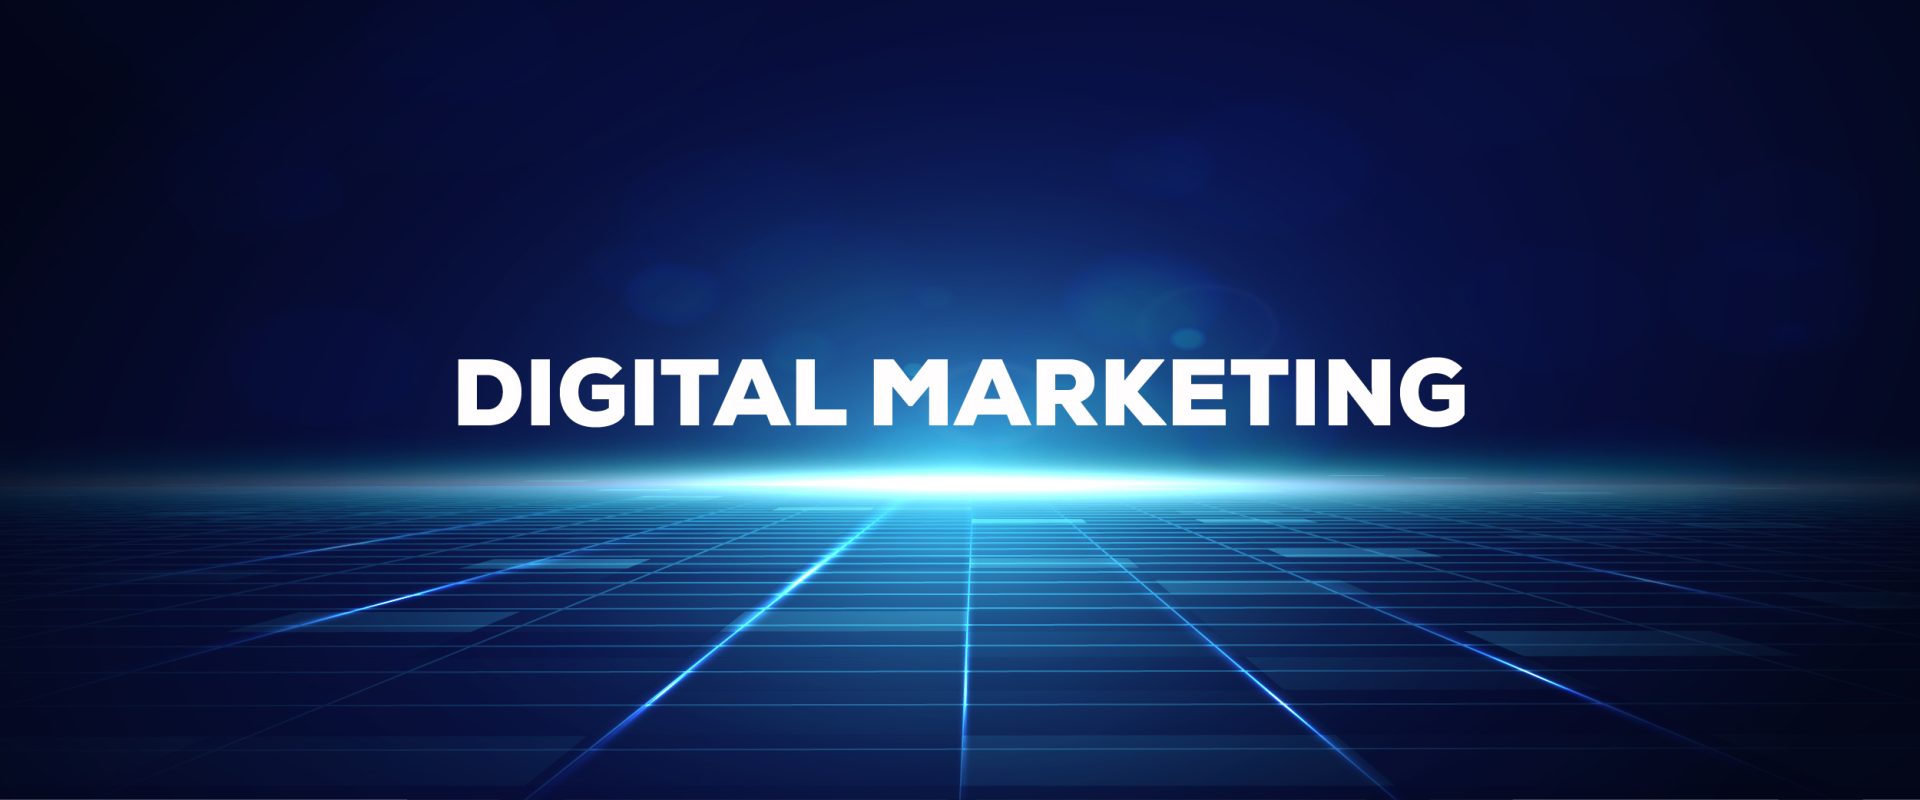 Best Digital Marketing service in Karachi - Pakistan